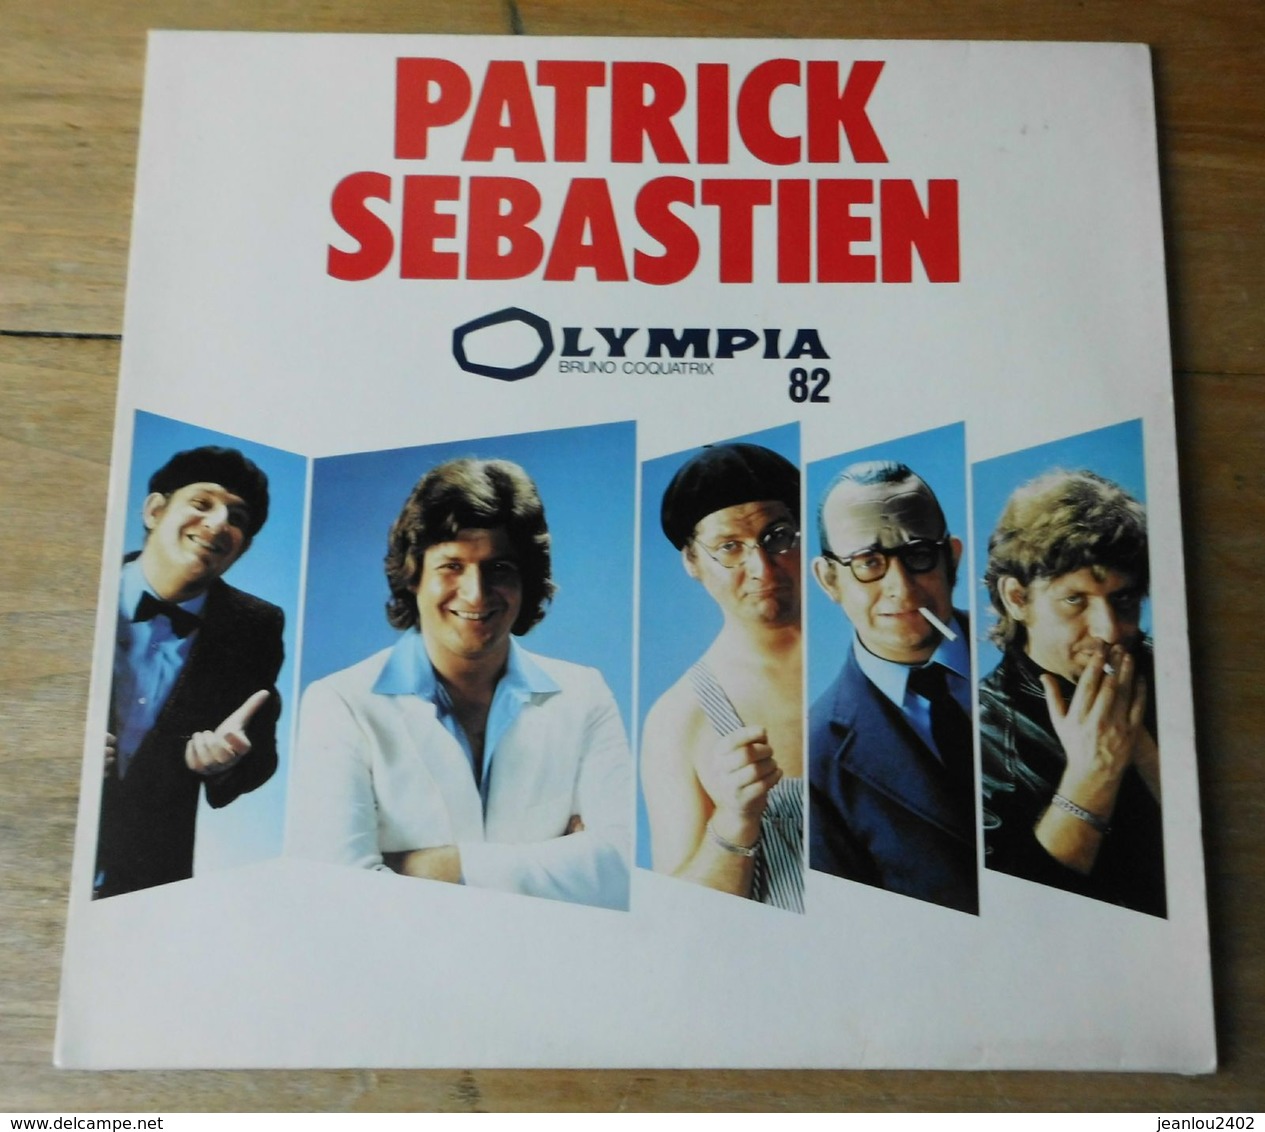 Vinyle "Patrick Sebastien" "Olympia 82" - Humor, Cabaret